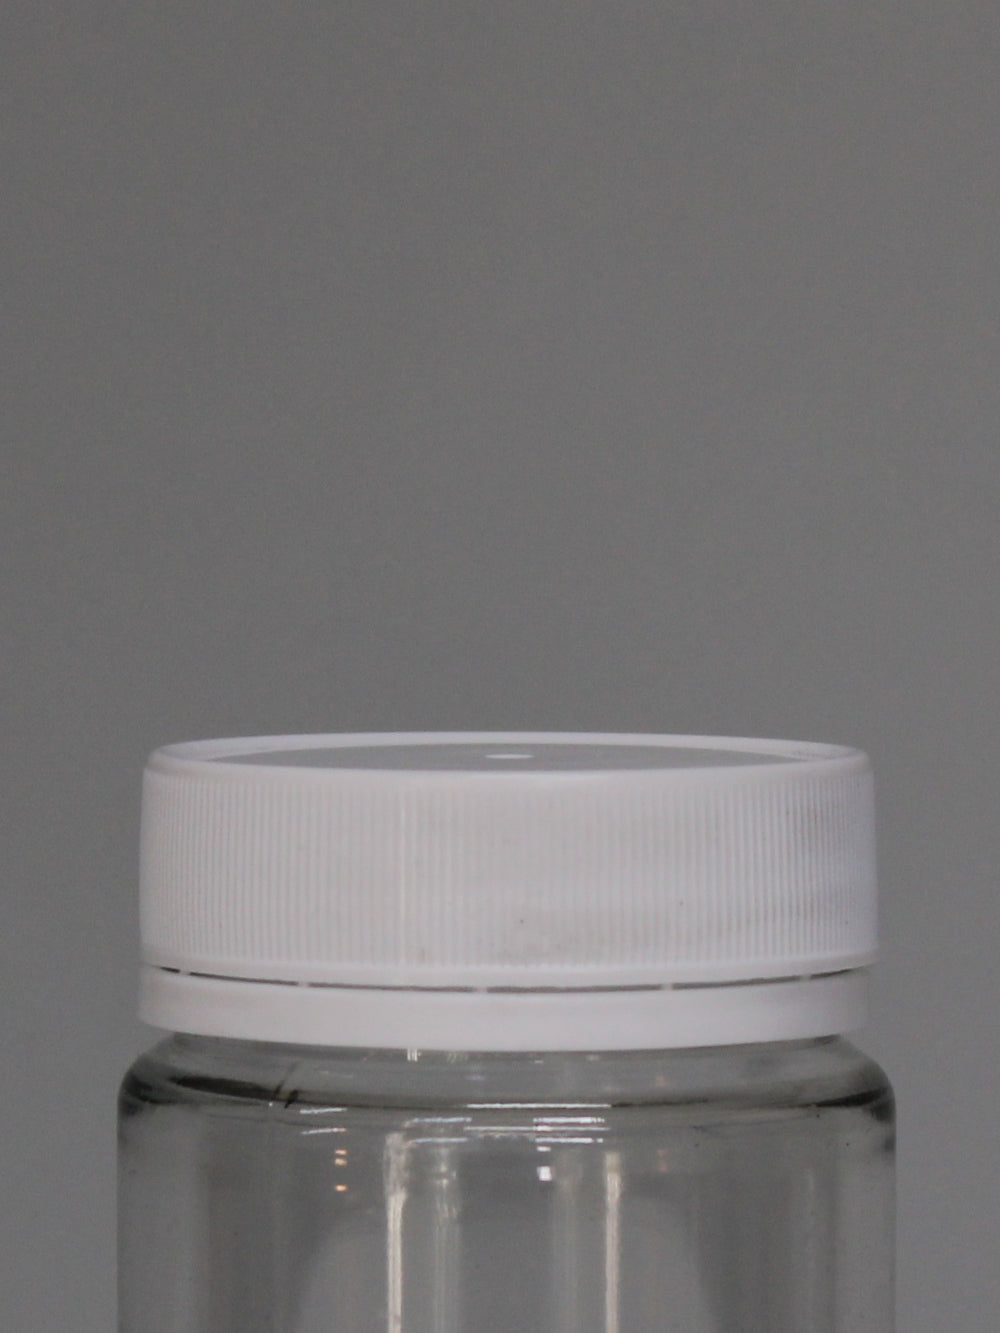 100ml Smooth 52mm PET Jar - (Box of 100 units)